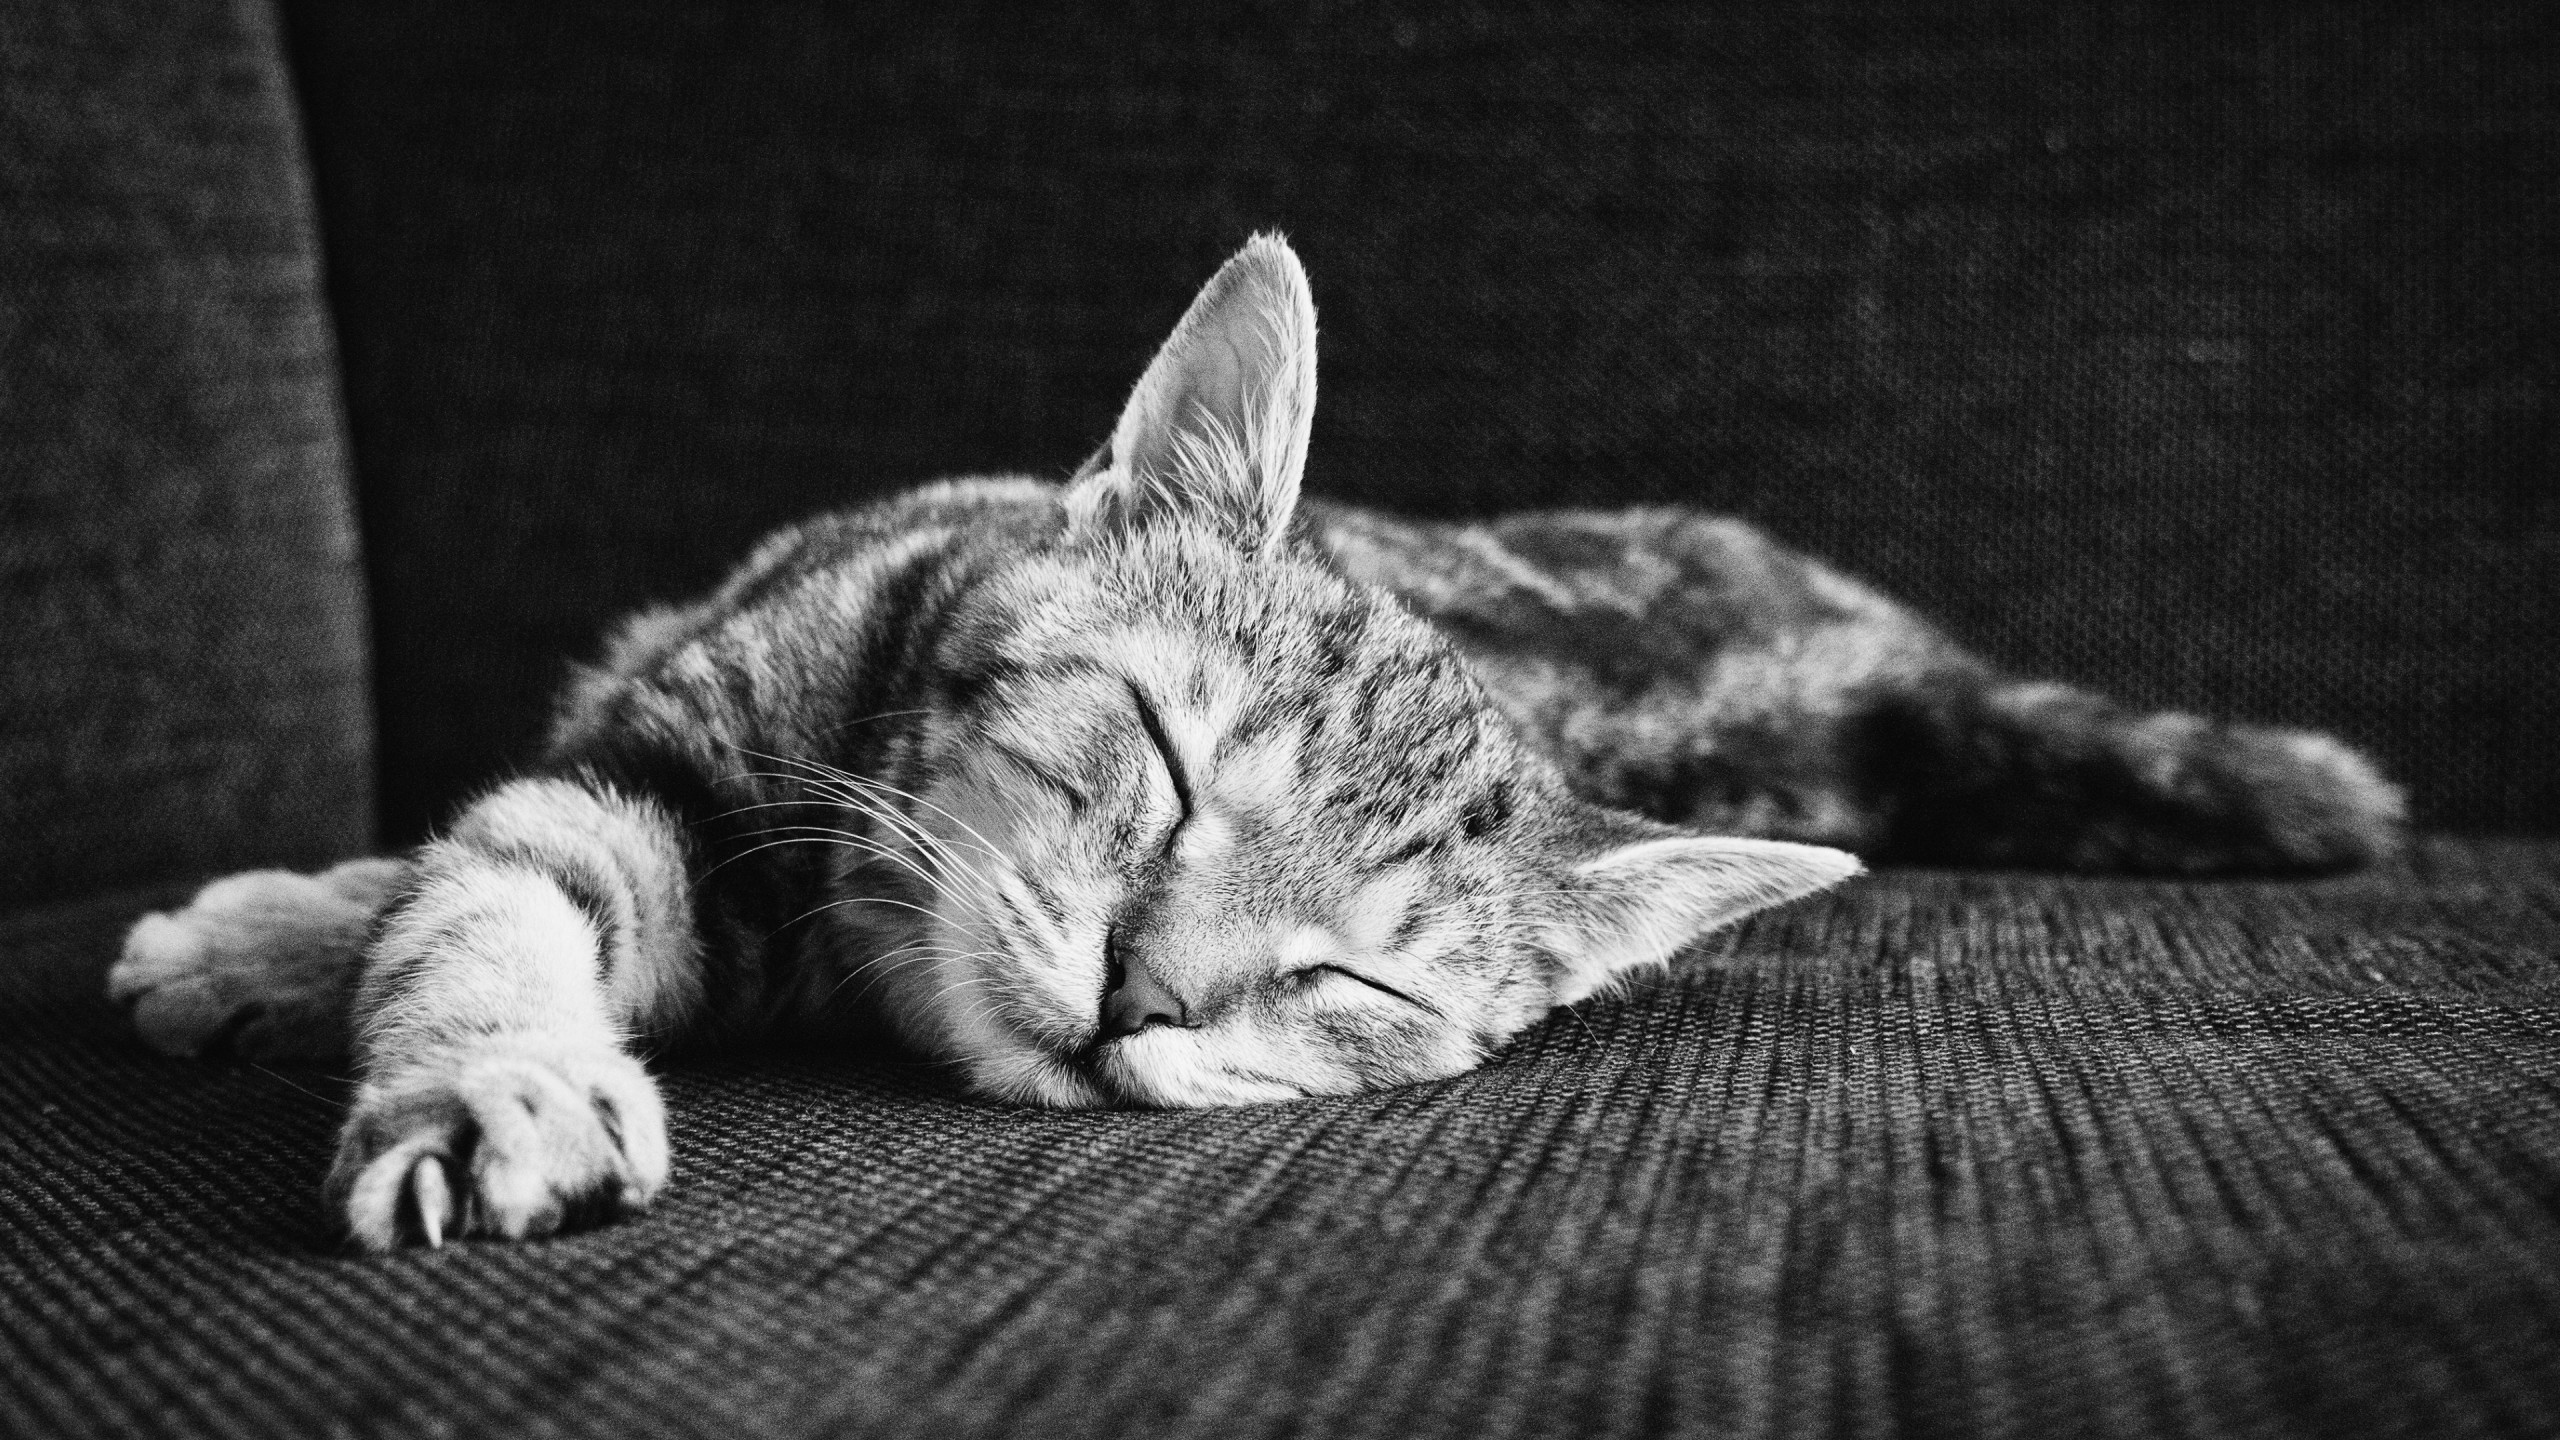 Zen of sleeping kitten wallpaper 2560x1440